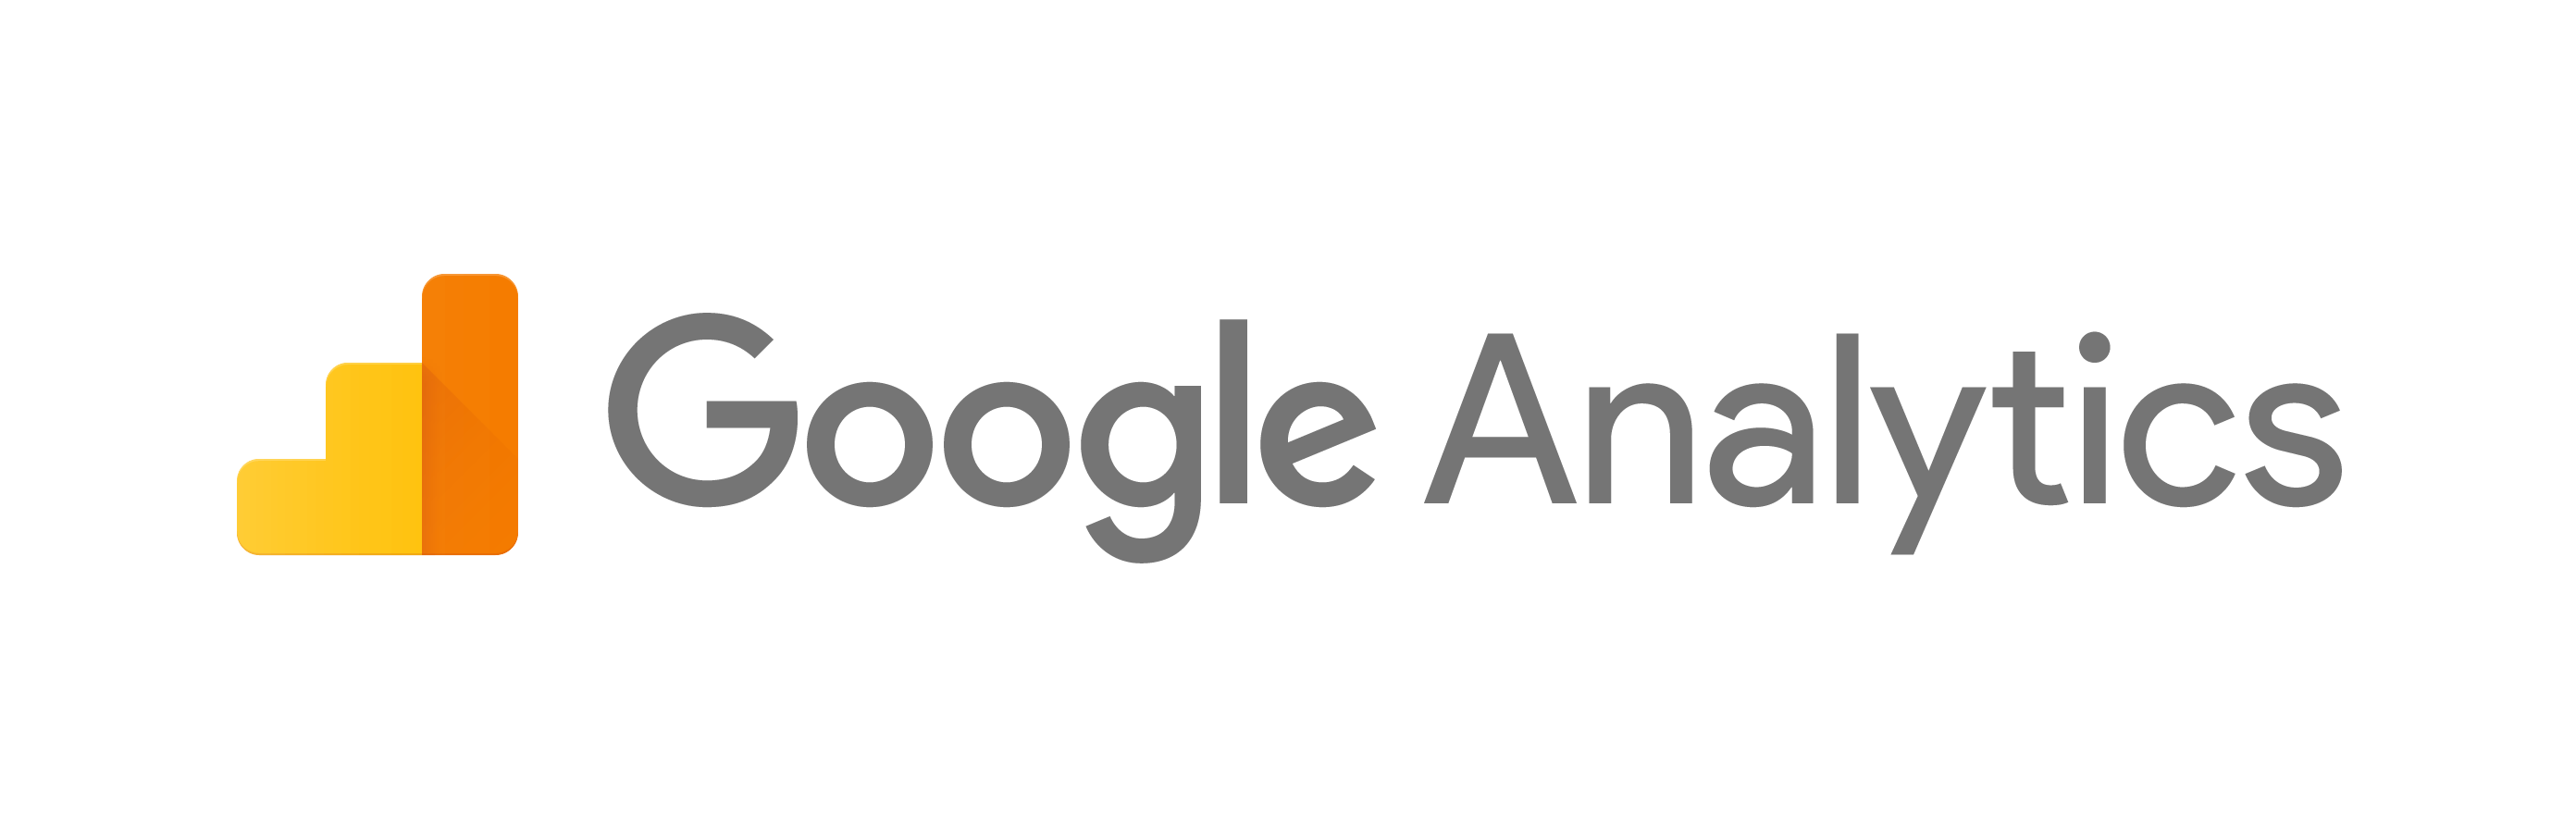 Current Google Logo - Google Analytics Developer Branding Guidelines & Policies | Google ...